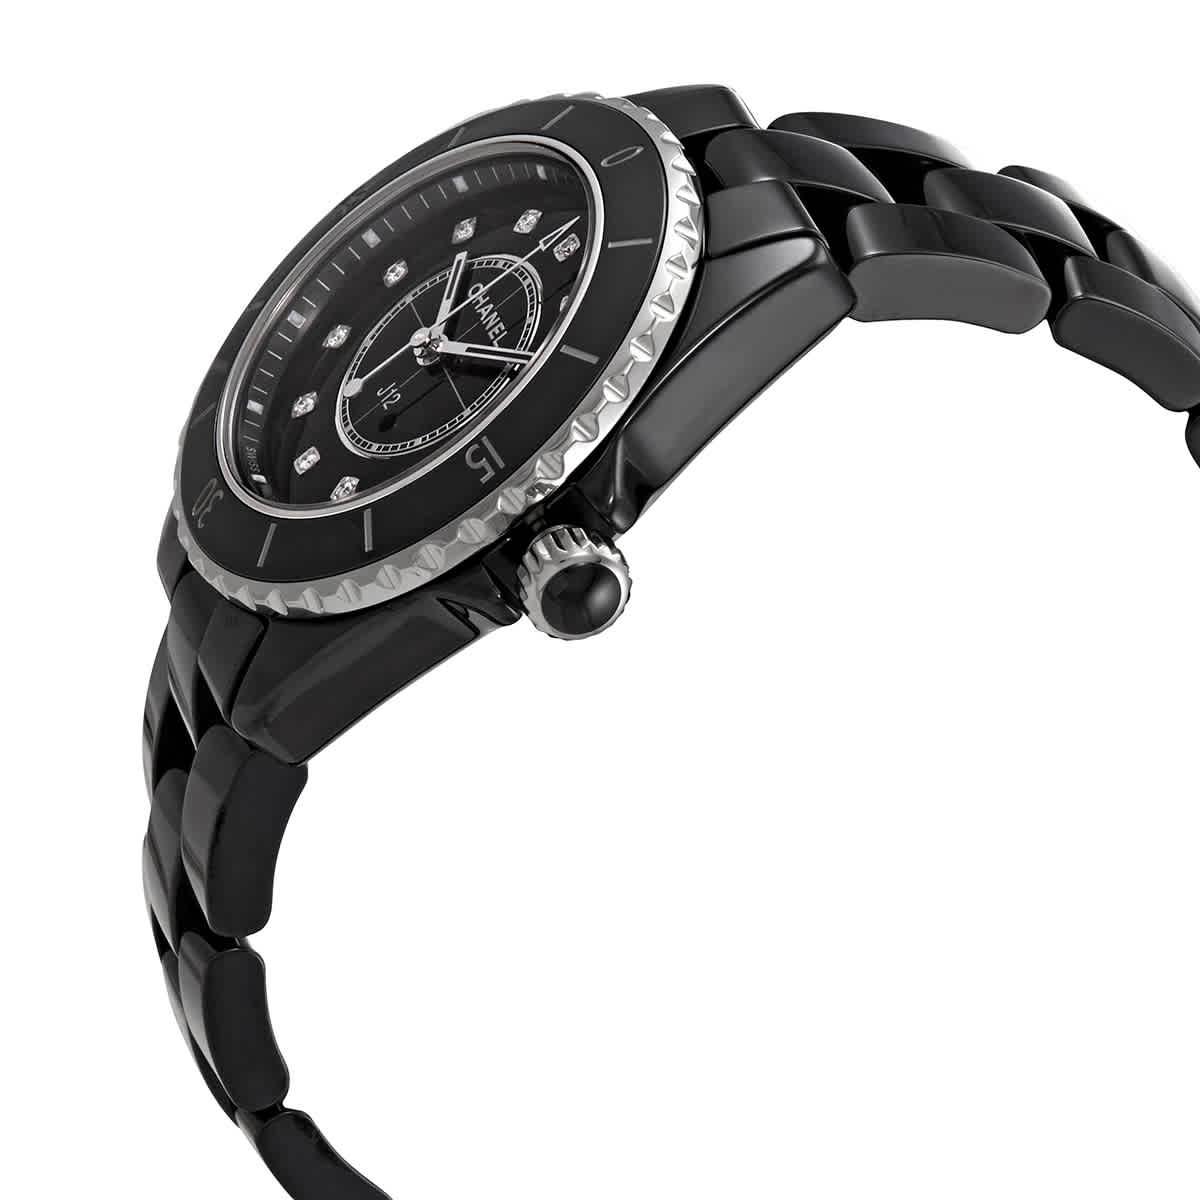 Chanel H6419 J12 Steel, Ceramic And 1.21ct Diamond Quartz Watch in Black